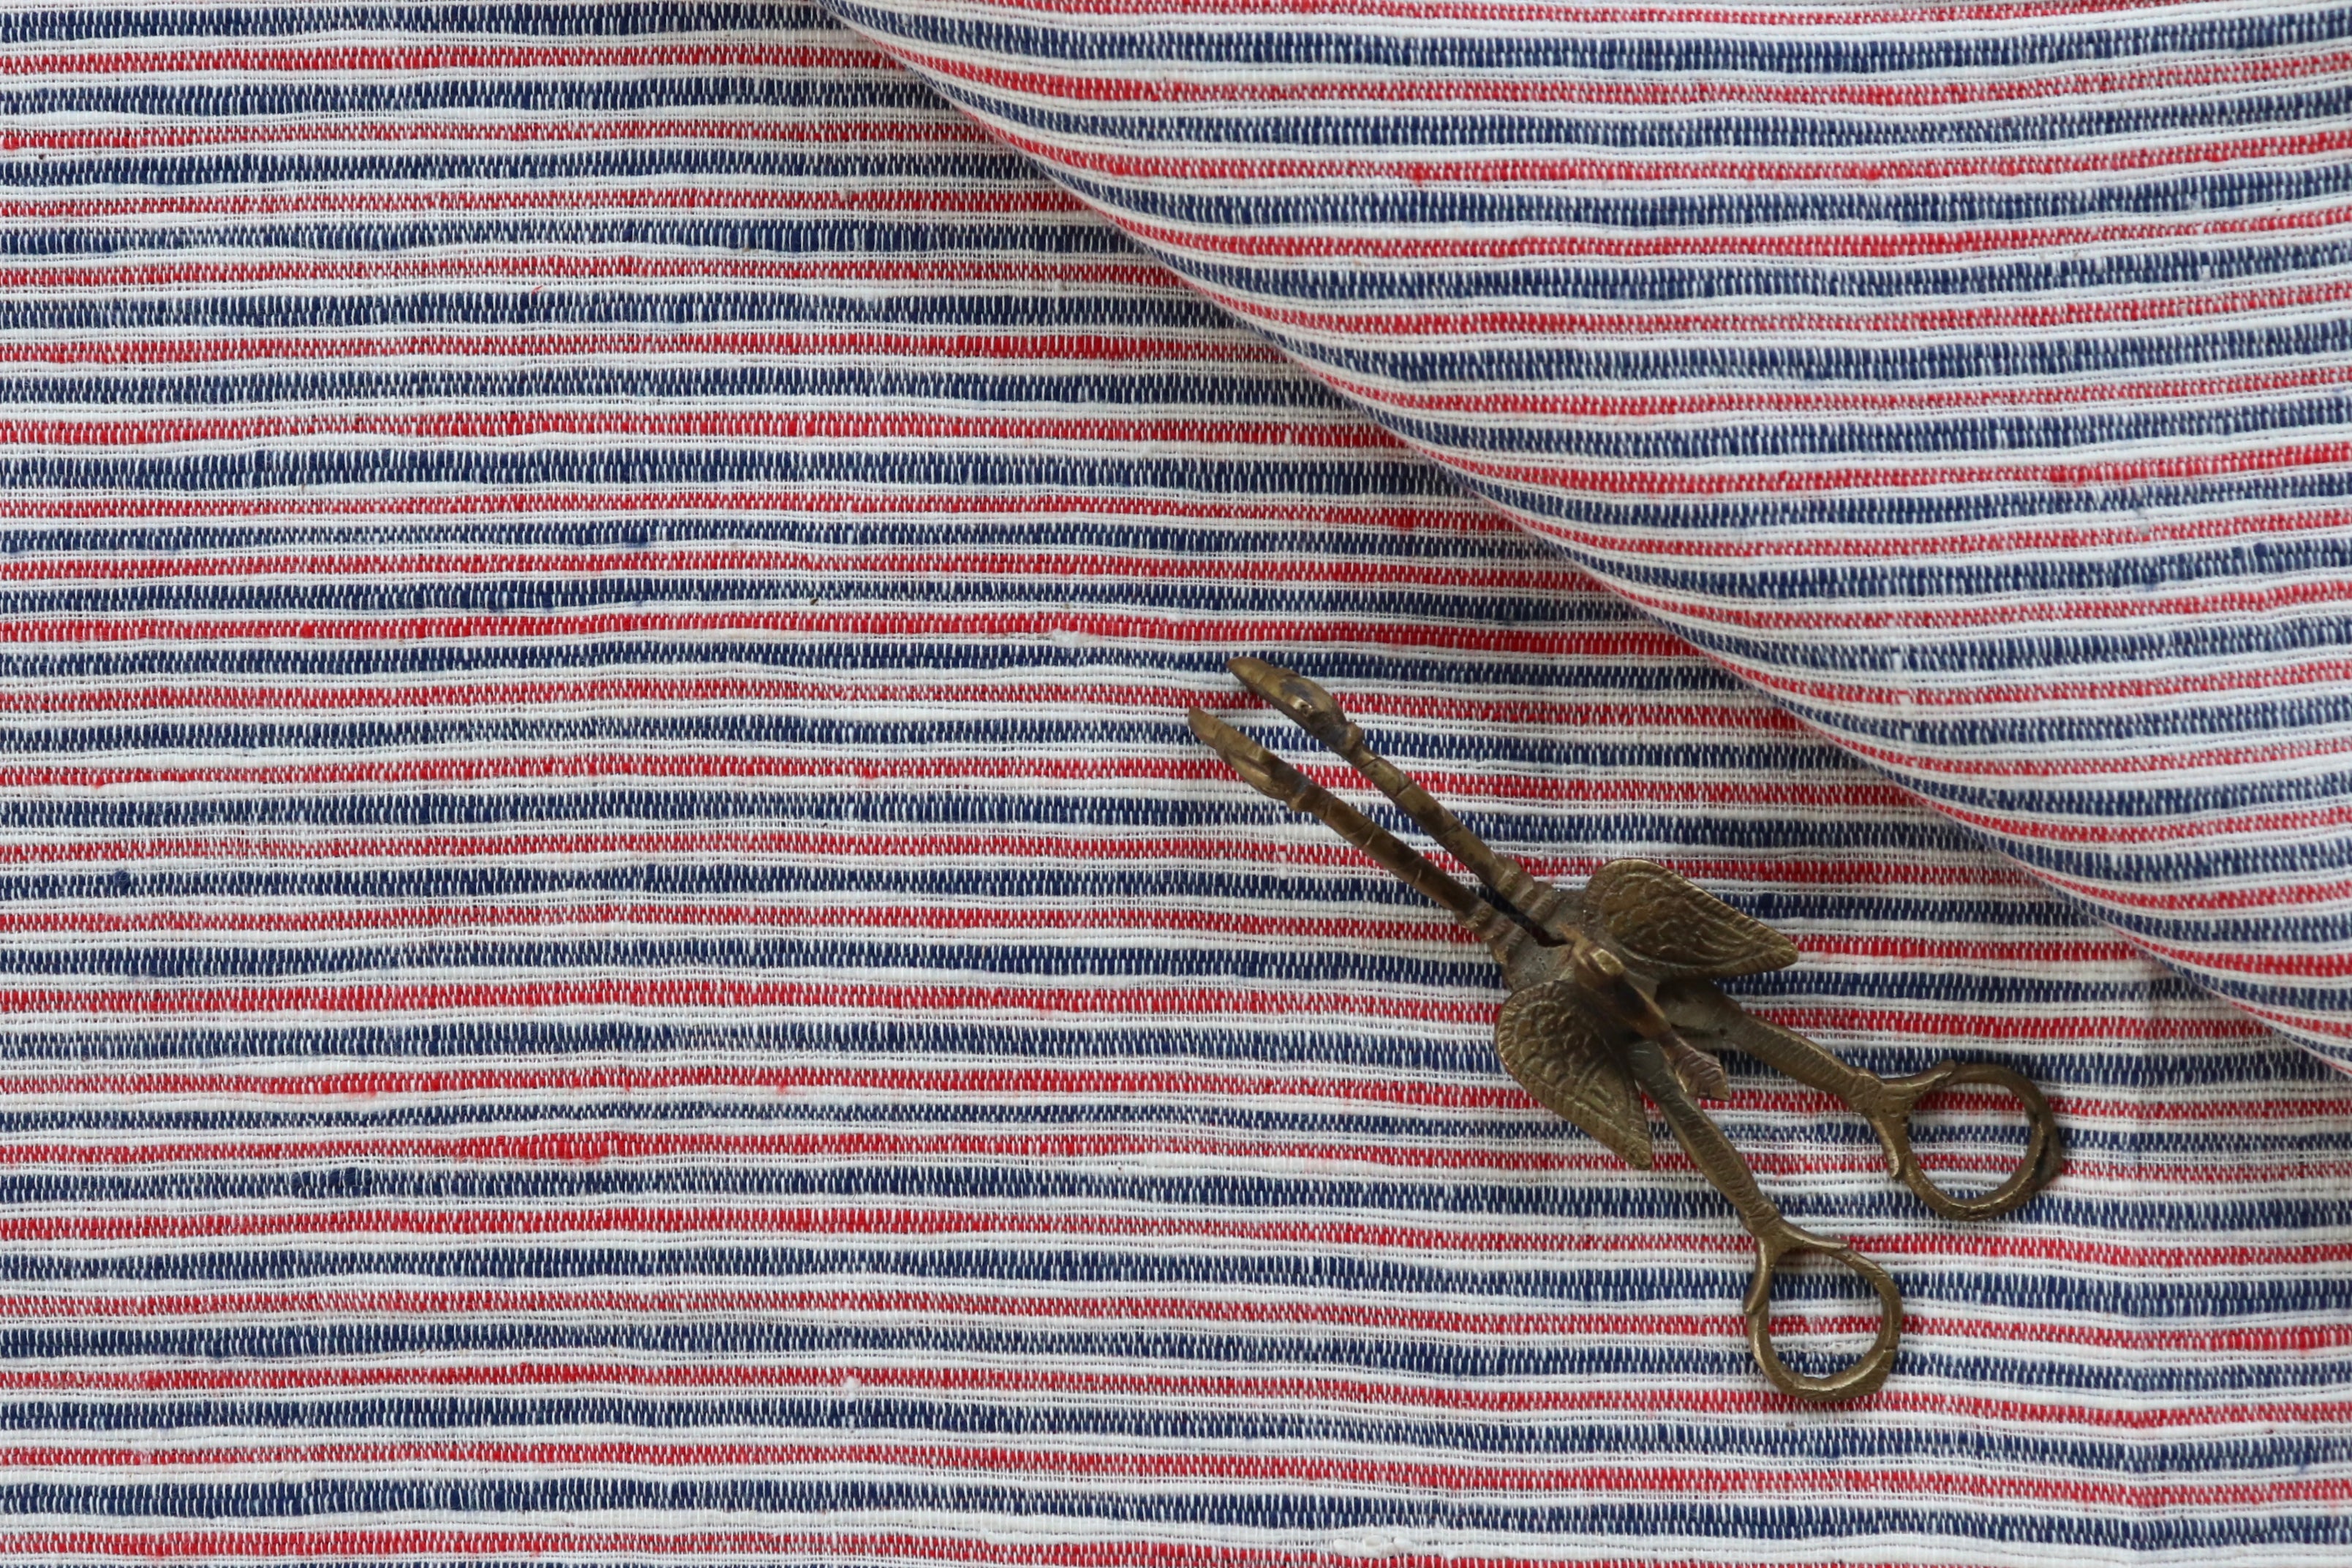 Red, White & Blue 2 mm Stripe Handspun Handwoven Fabric